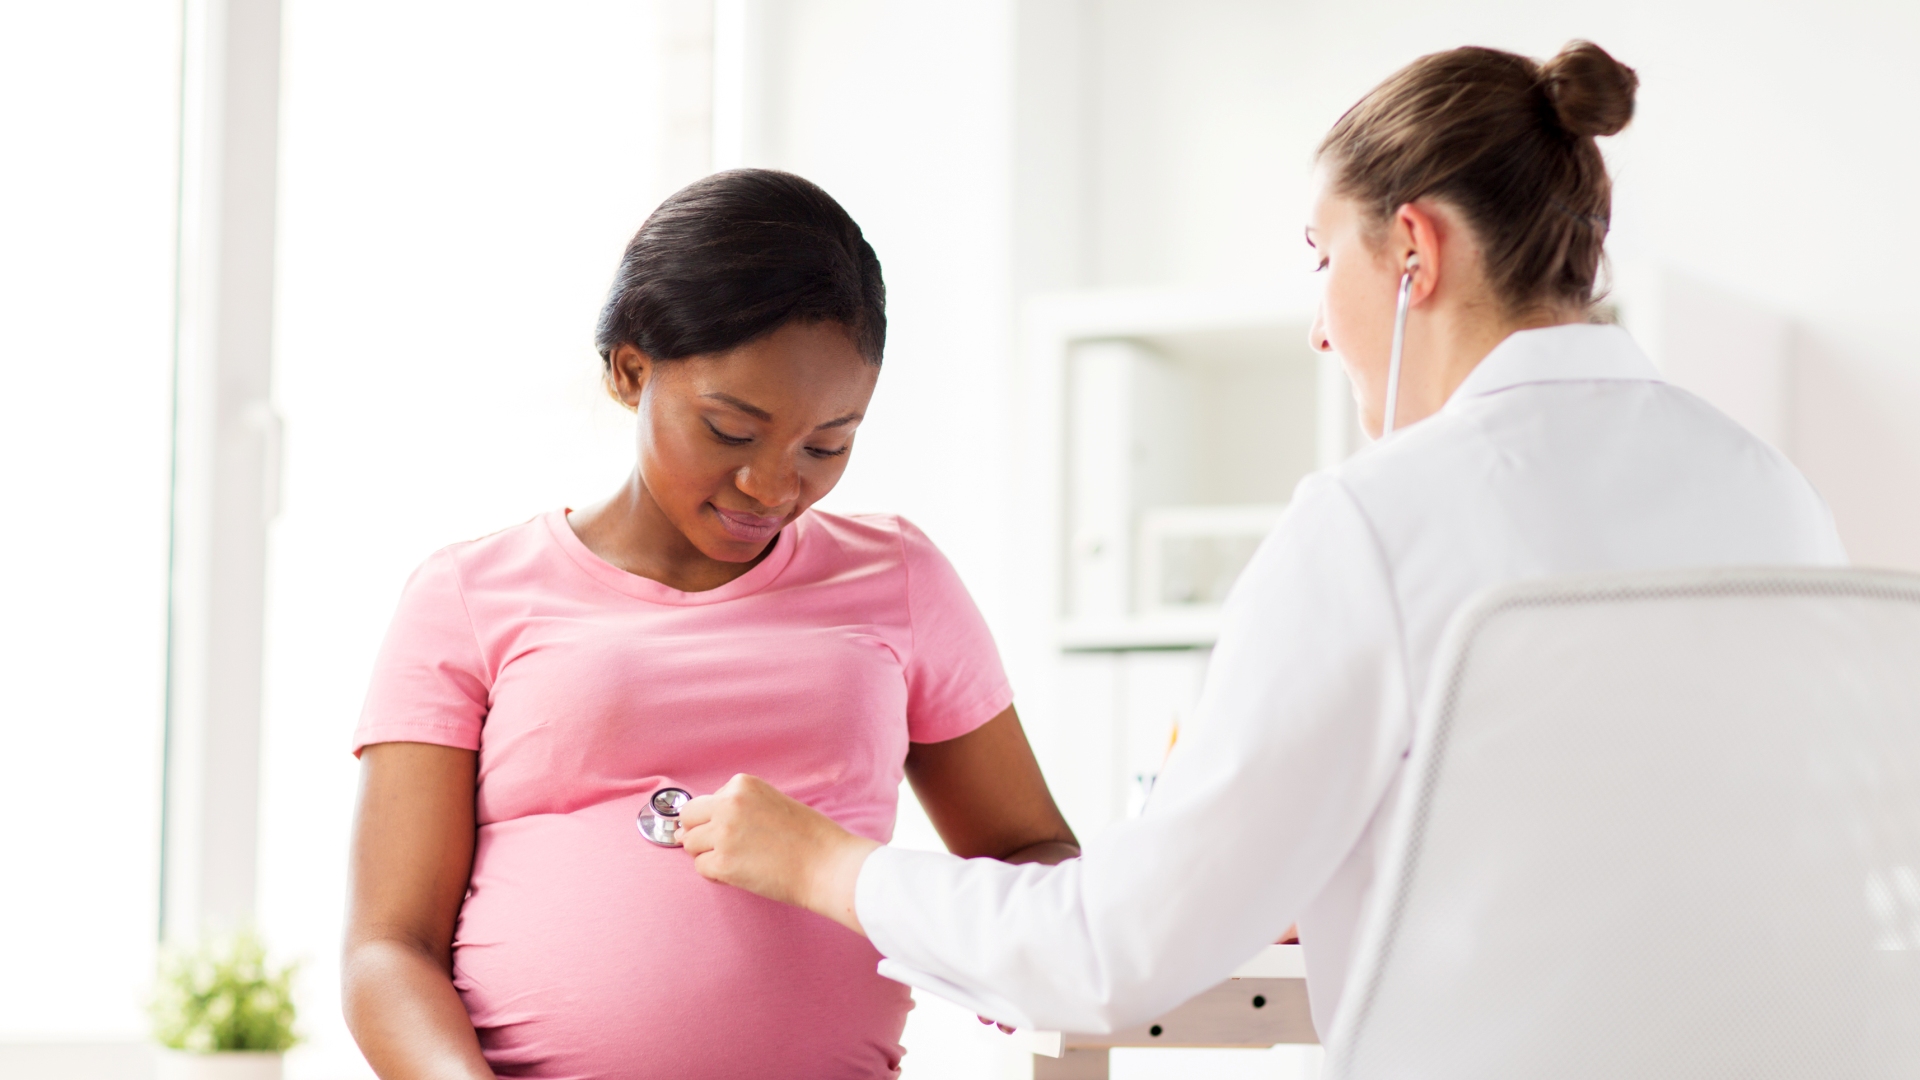 Pregnant Women Are High Risk For COVID-19